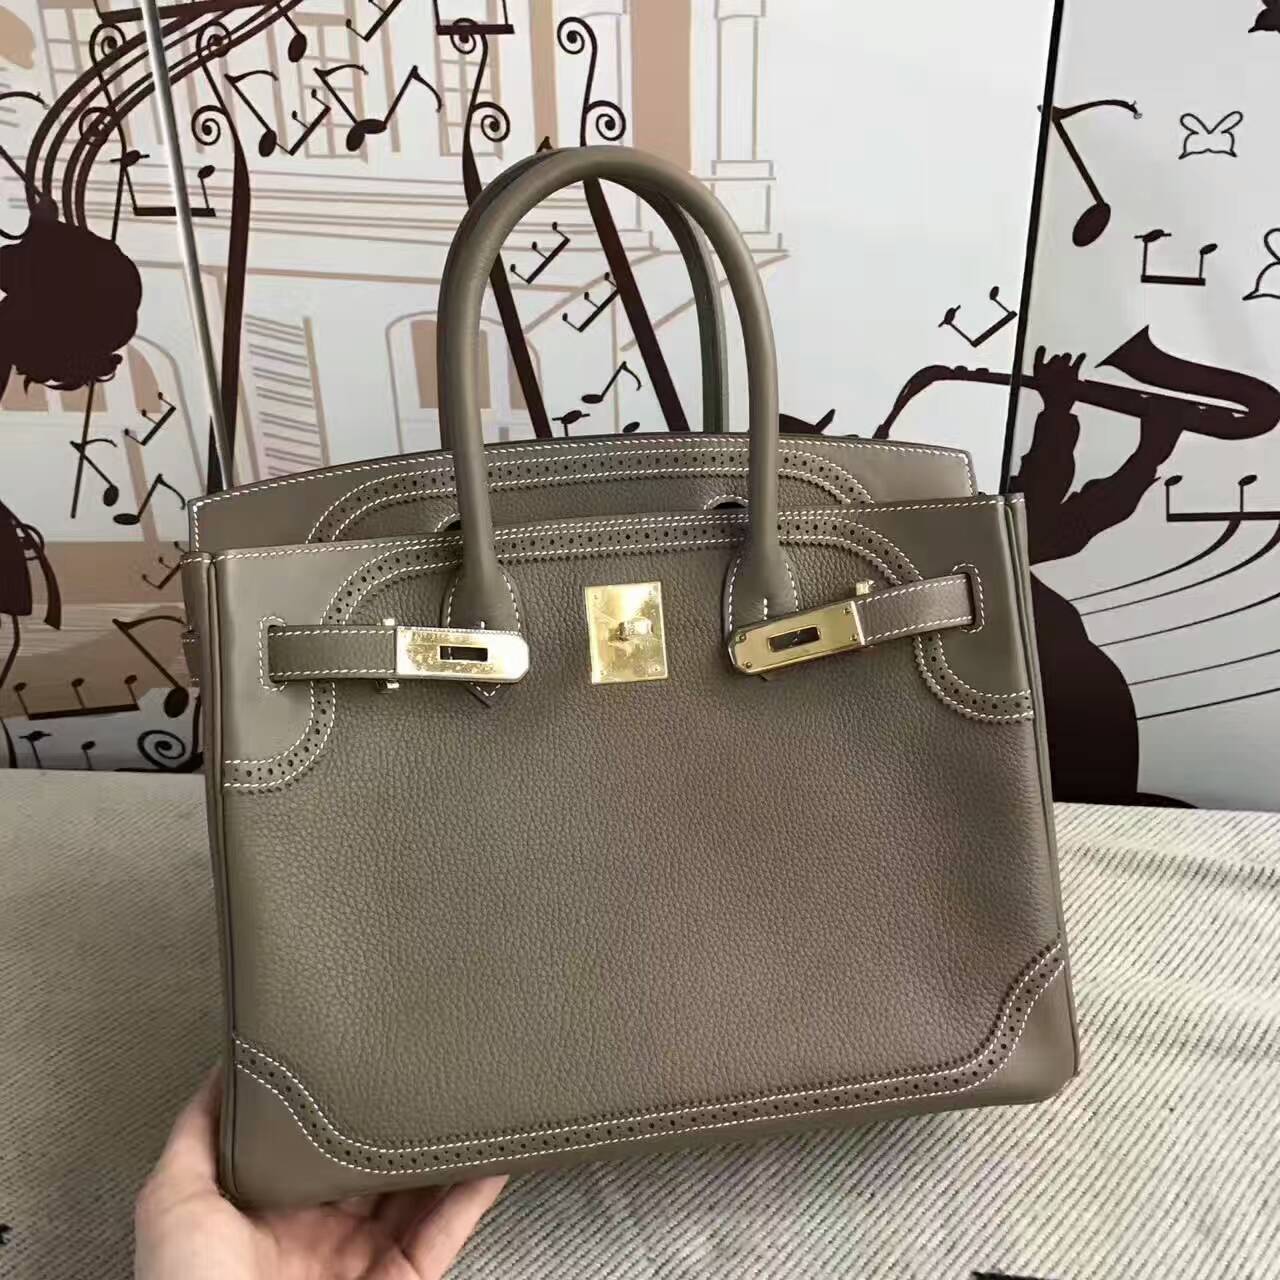 On Sale Hermes CK18 Etoupe Grey Togo Leather Ghillies Birkin Bag 30cm